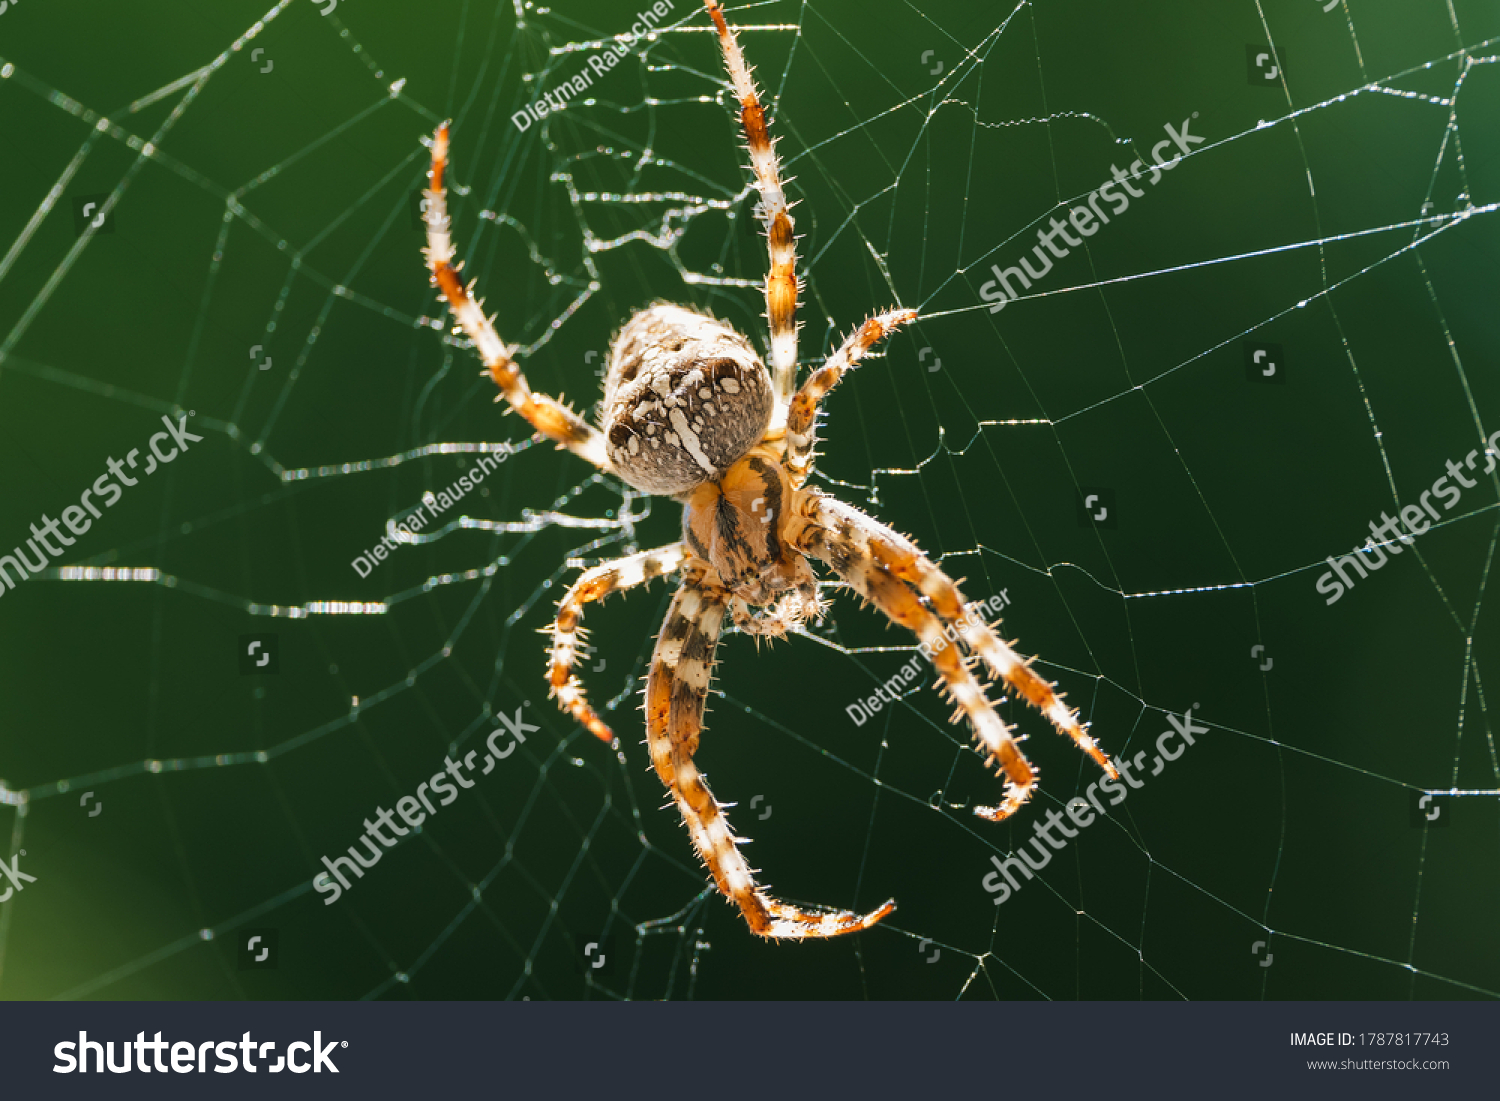 European garden spider, diadem spider, orangie, cross spider or crowned orb weaver in its web close up against Green Background #1787817743